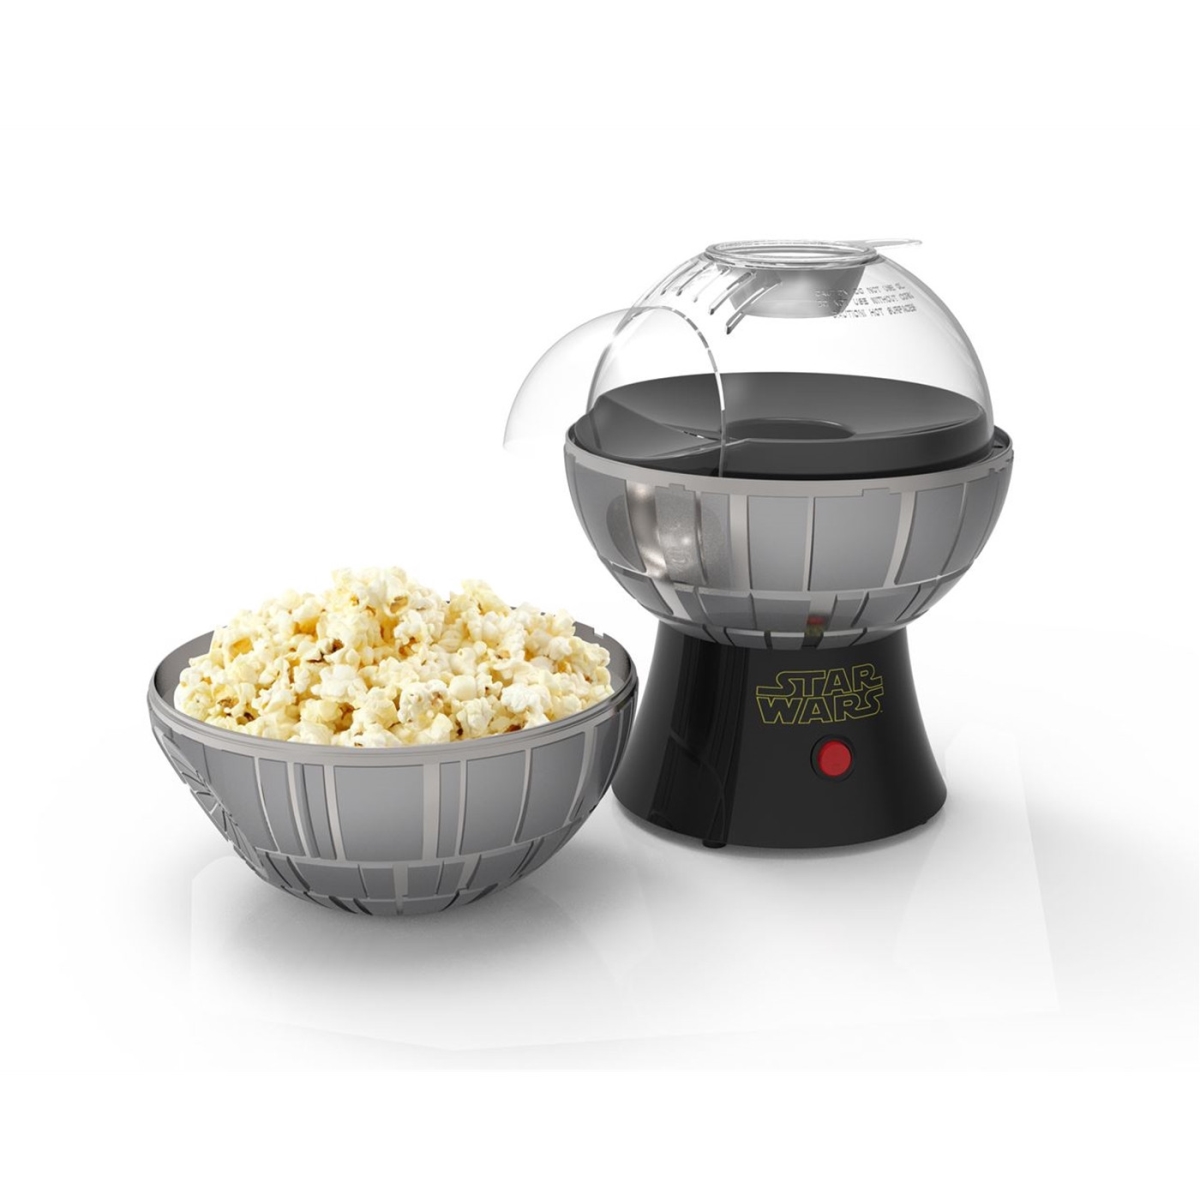 Beku Bakeware Death Star Popcorn Maker with Bowl